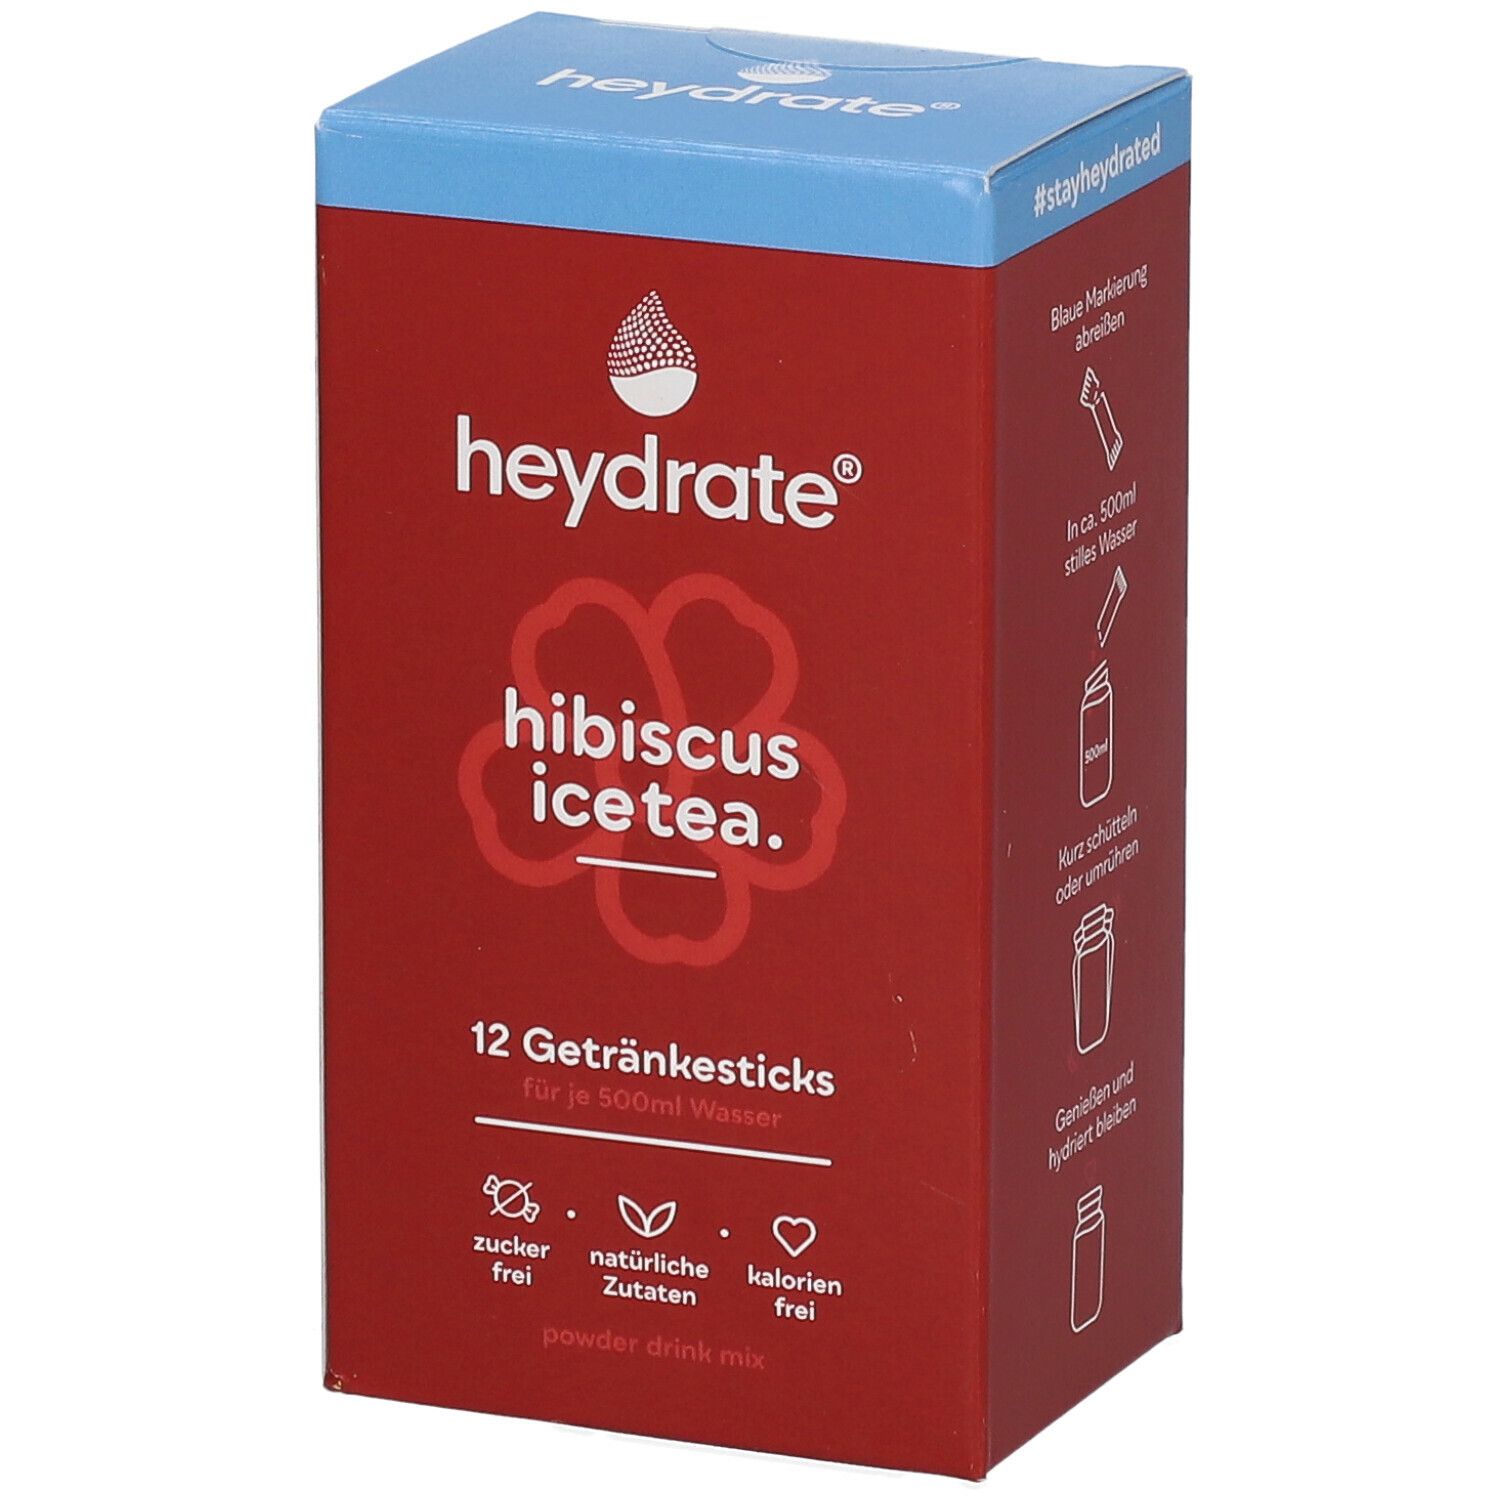 Image of heydrate® hibiscus icetea